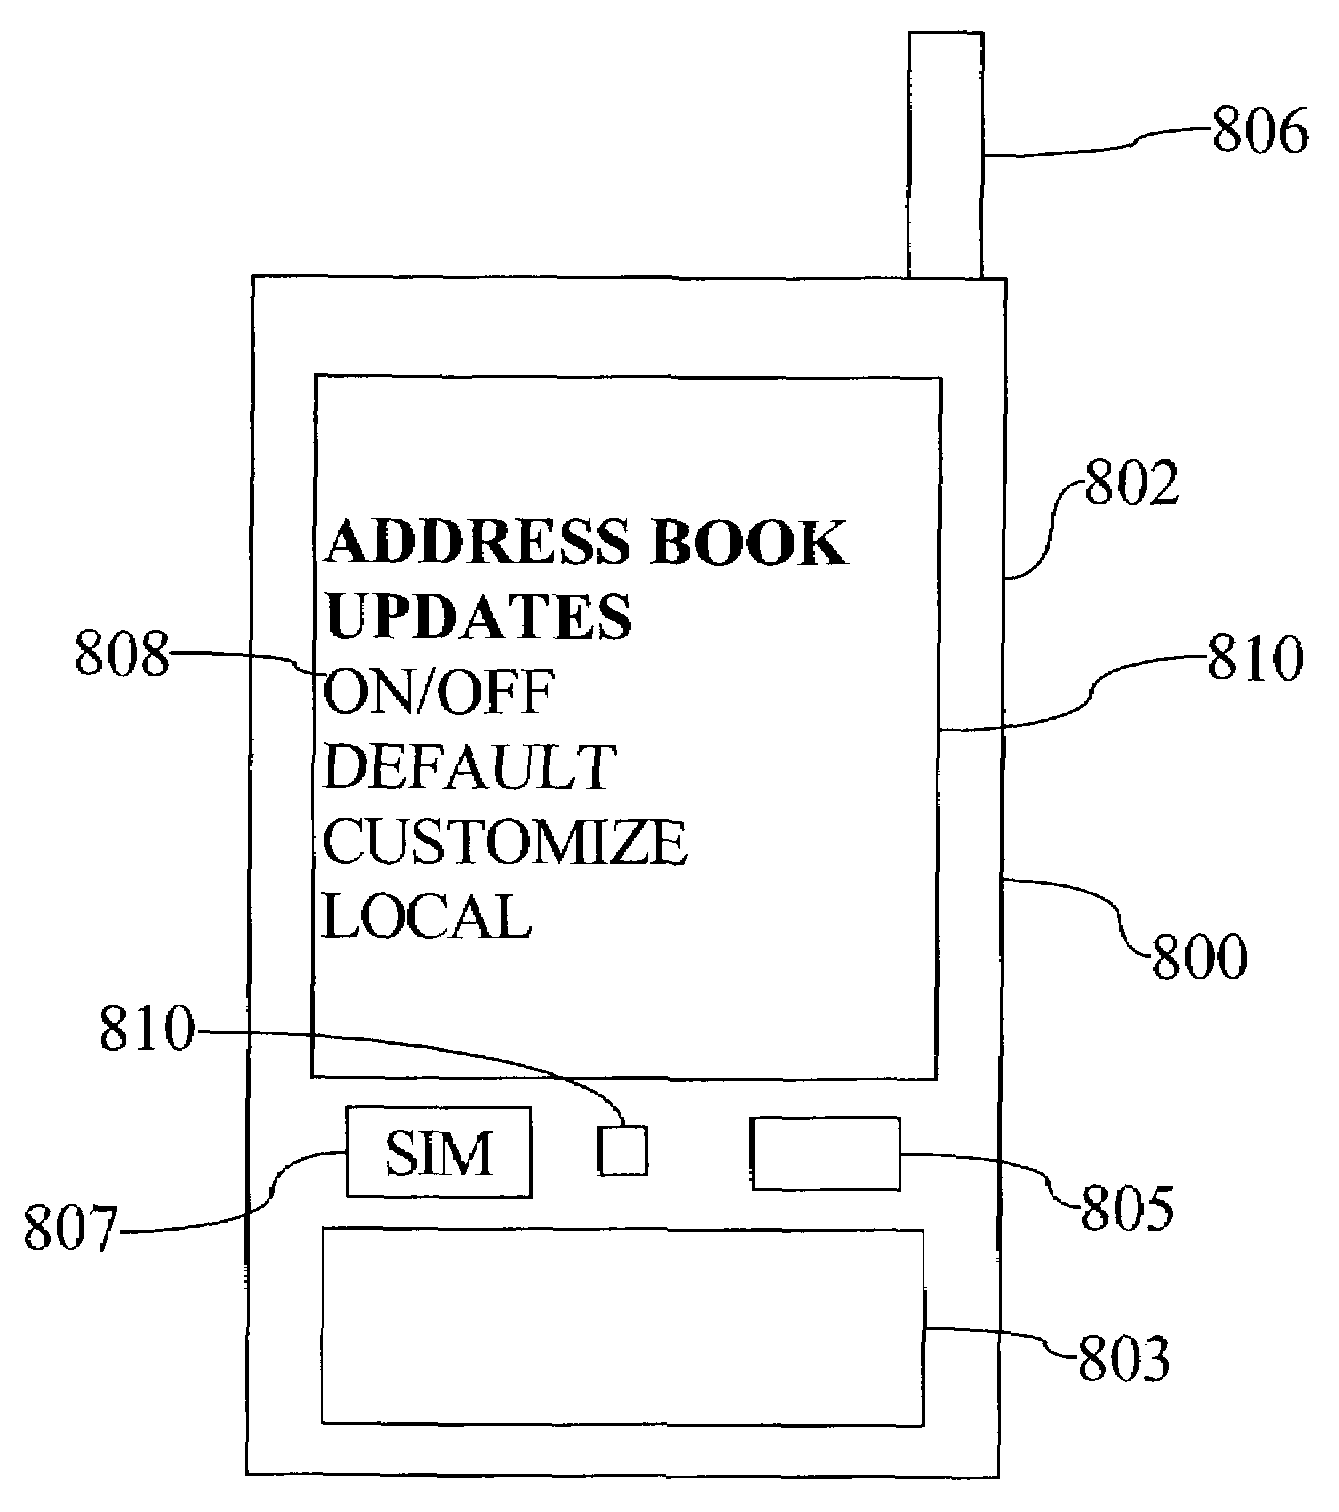 Autopopulation of address book entries